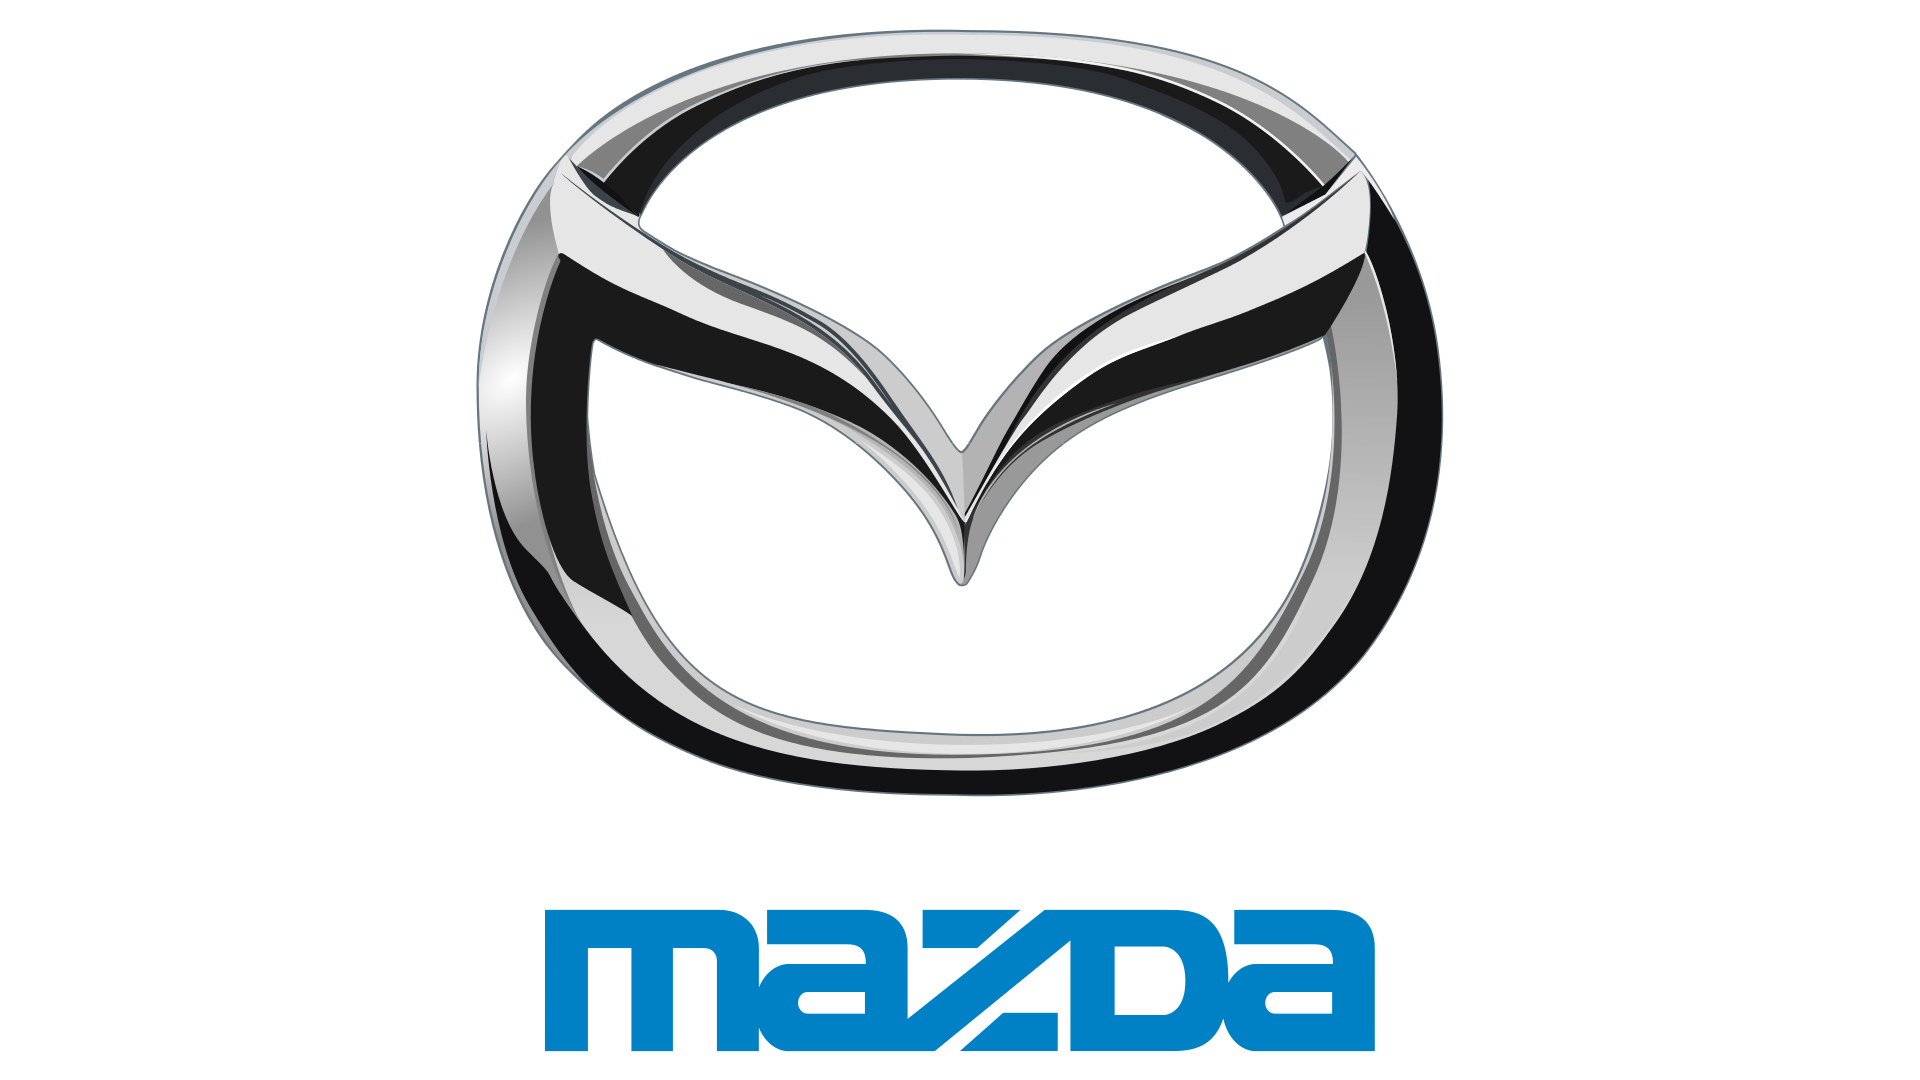 Mazda-logo-1997-1920x1080-1